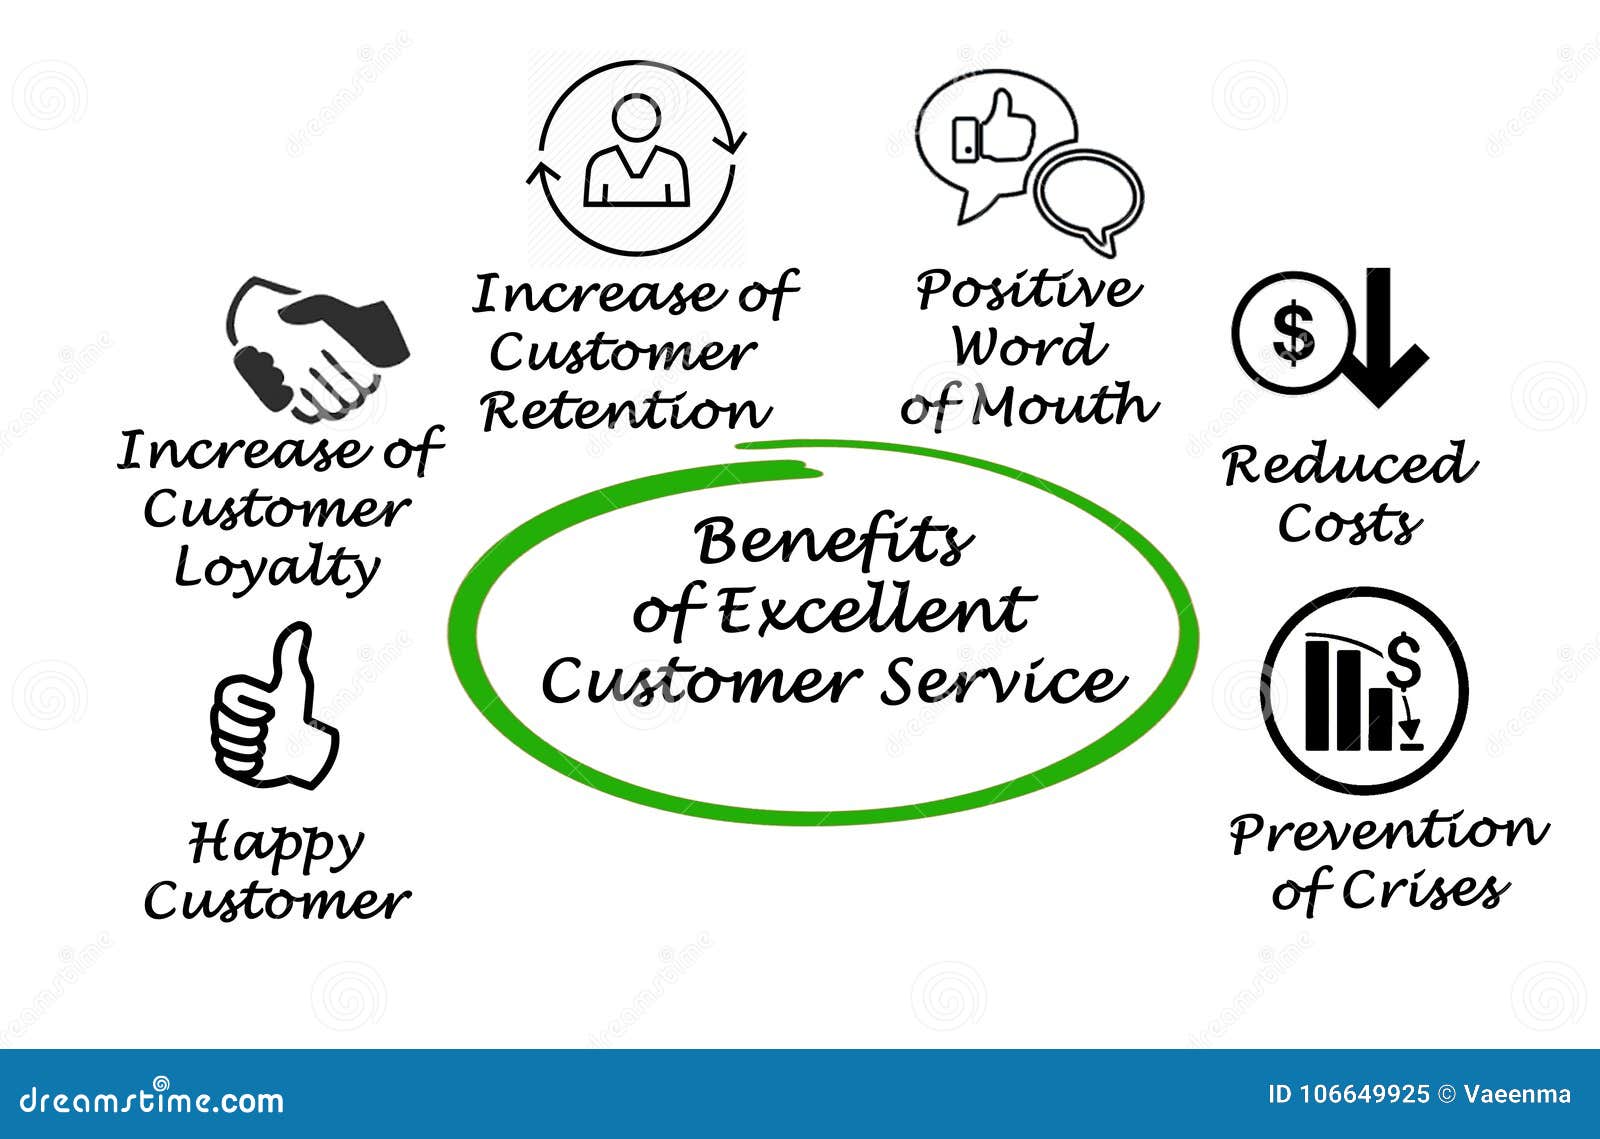 Excellent Customer Service Stock Illustration Illustration Of Loyalty